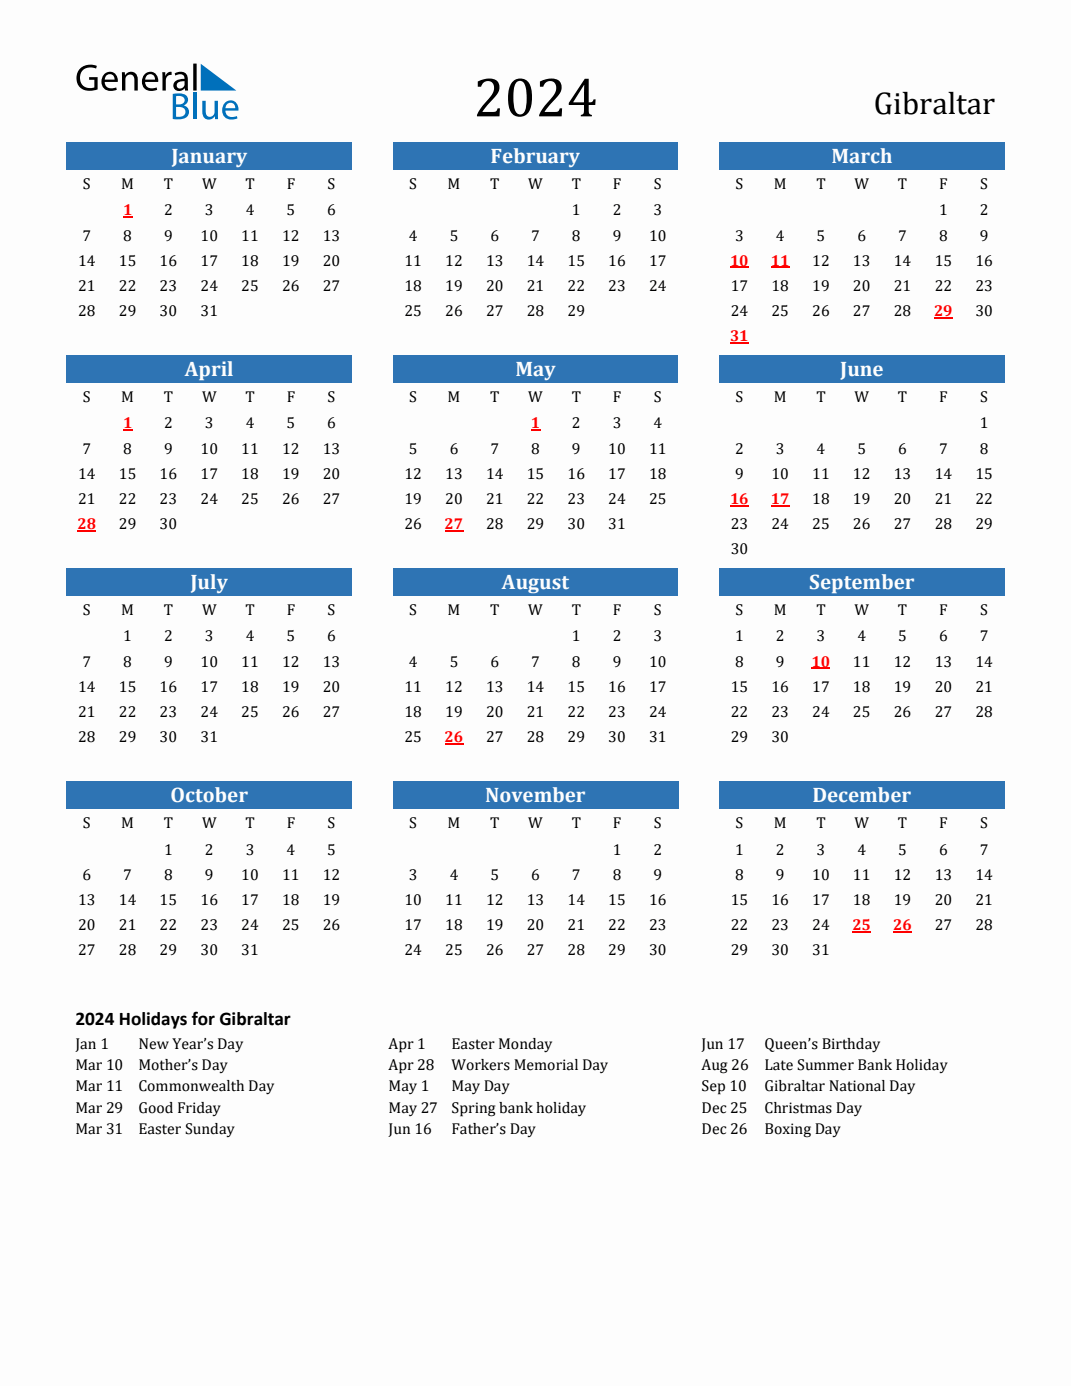 2024 Gibraltar Calendar with Holidays